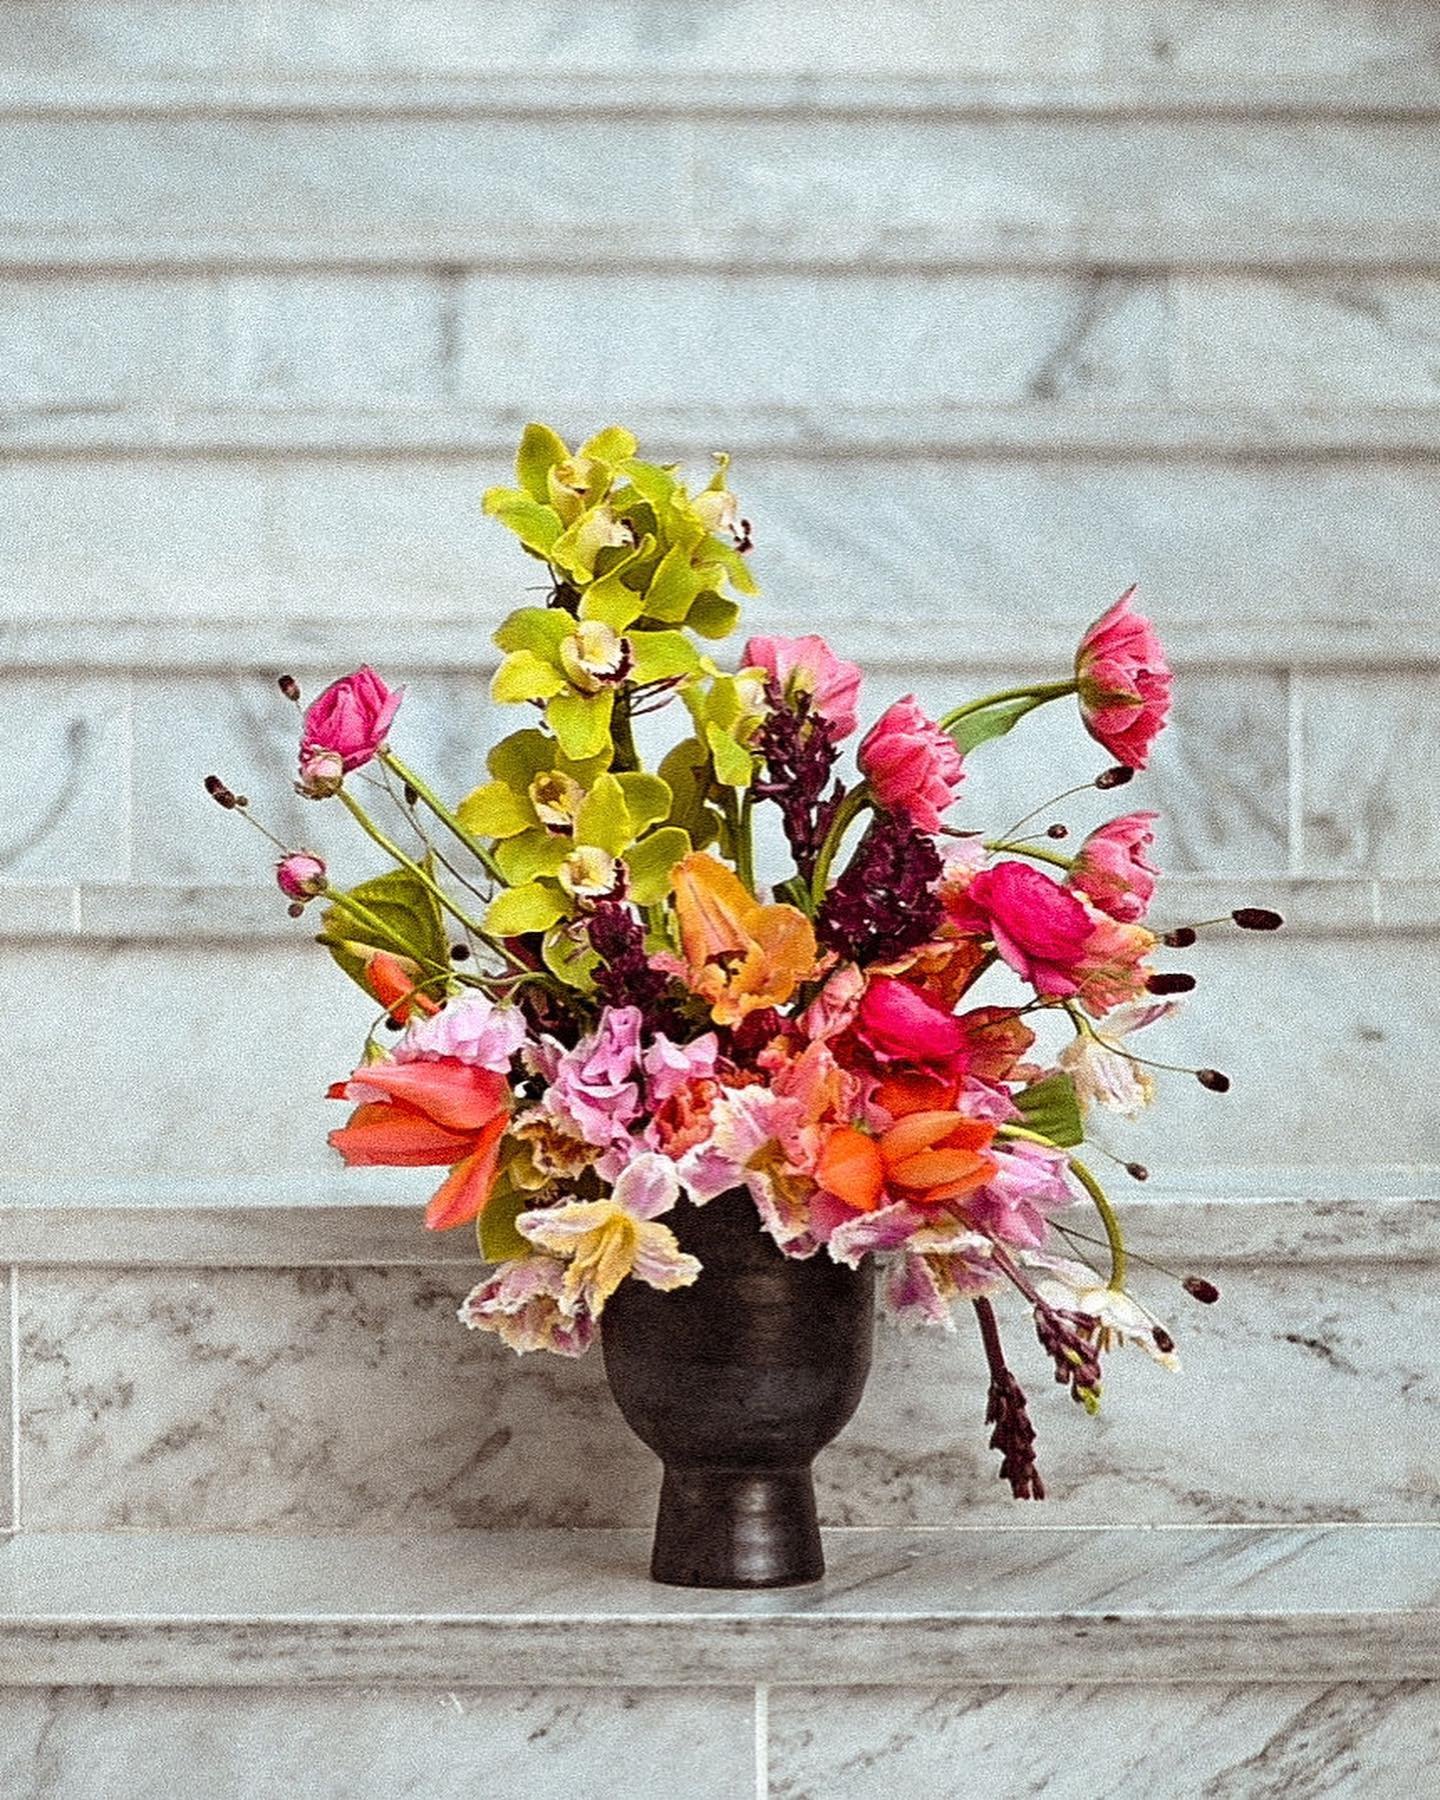 Have a badass colorful wedding. I dare you.

#themakingoffridas #fridasflowers